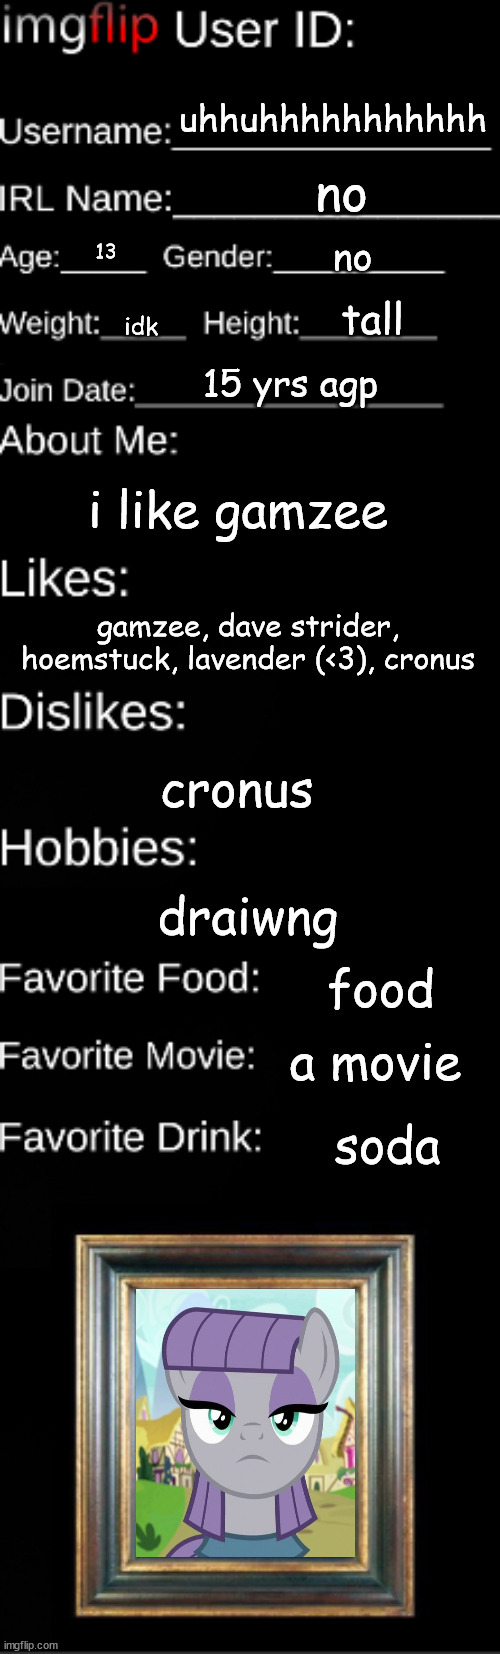 Imgflip user ID | uhhuhhhhhhhhhhh; no; no; 13; tall; idk; 15 yrs agp; i like gamzee; gamzee, dave strider, hoemstuck, lavender (<3), cronus; cronus; draiwng; food; a movie; soda | image tagged in imgflip user id | made w/ Imgflip meme maker